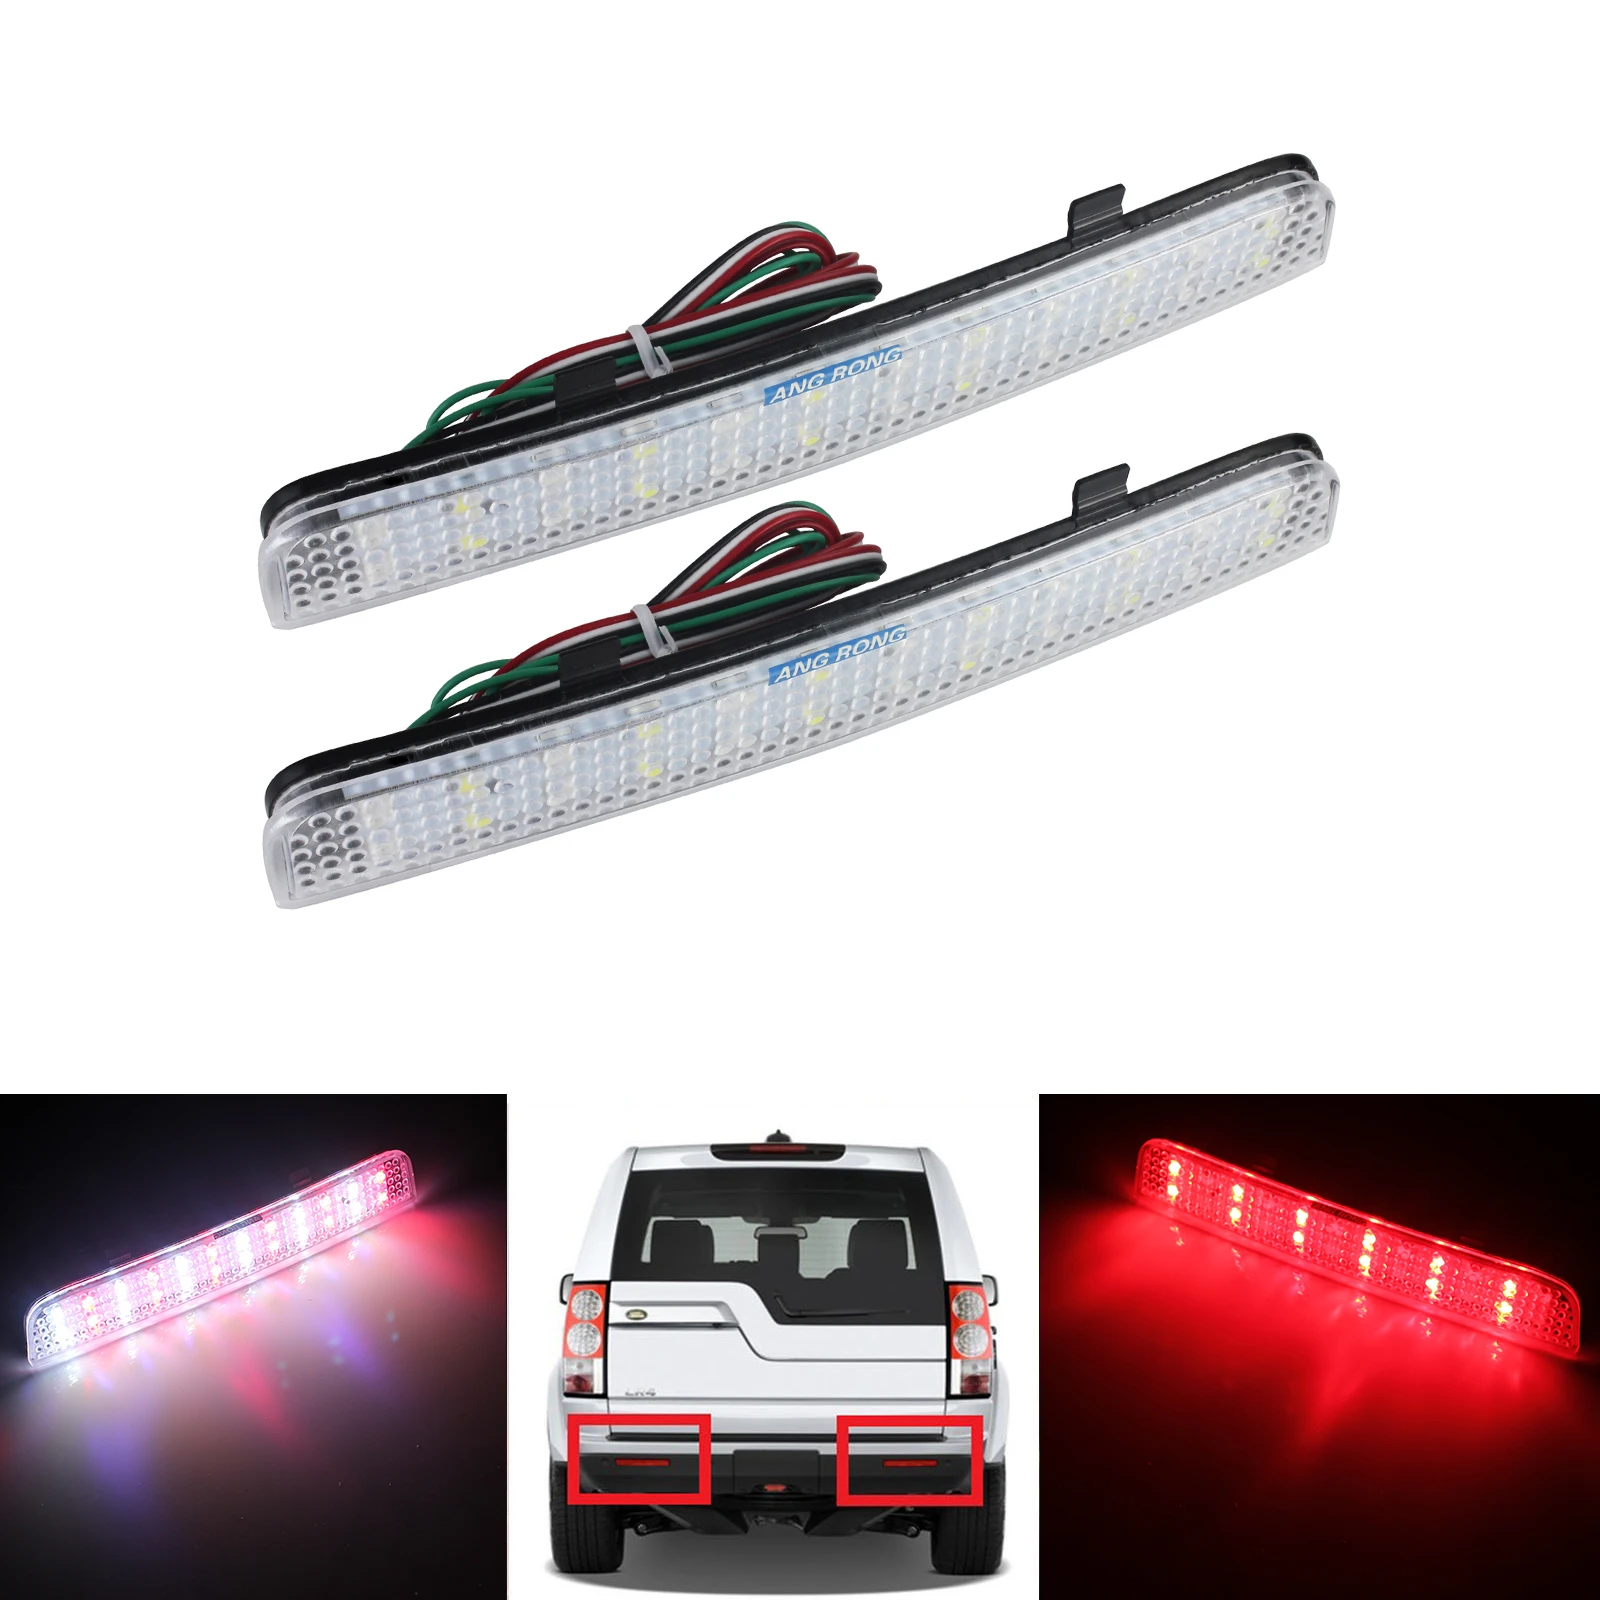 Red Bumper Reflector LED Tail Brake Light For L322 Range Rover LR2 Freelander 2